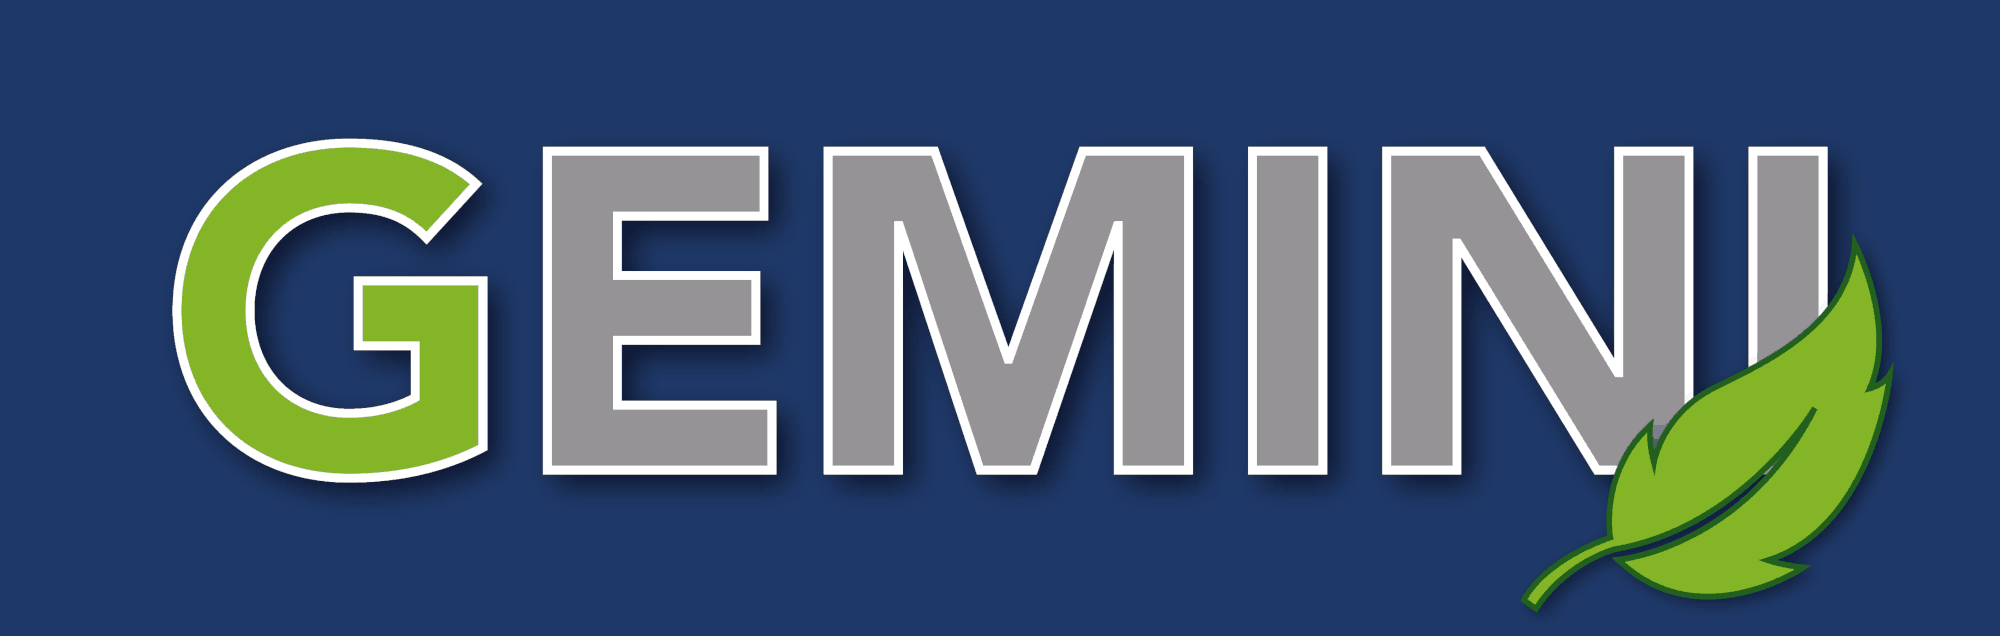 Gemini-Logo -Green-Small